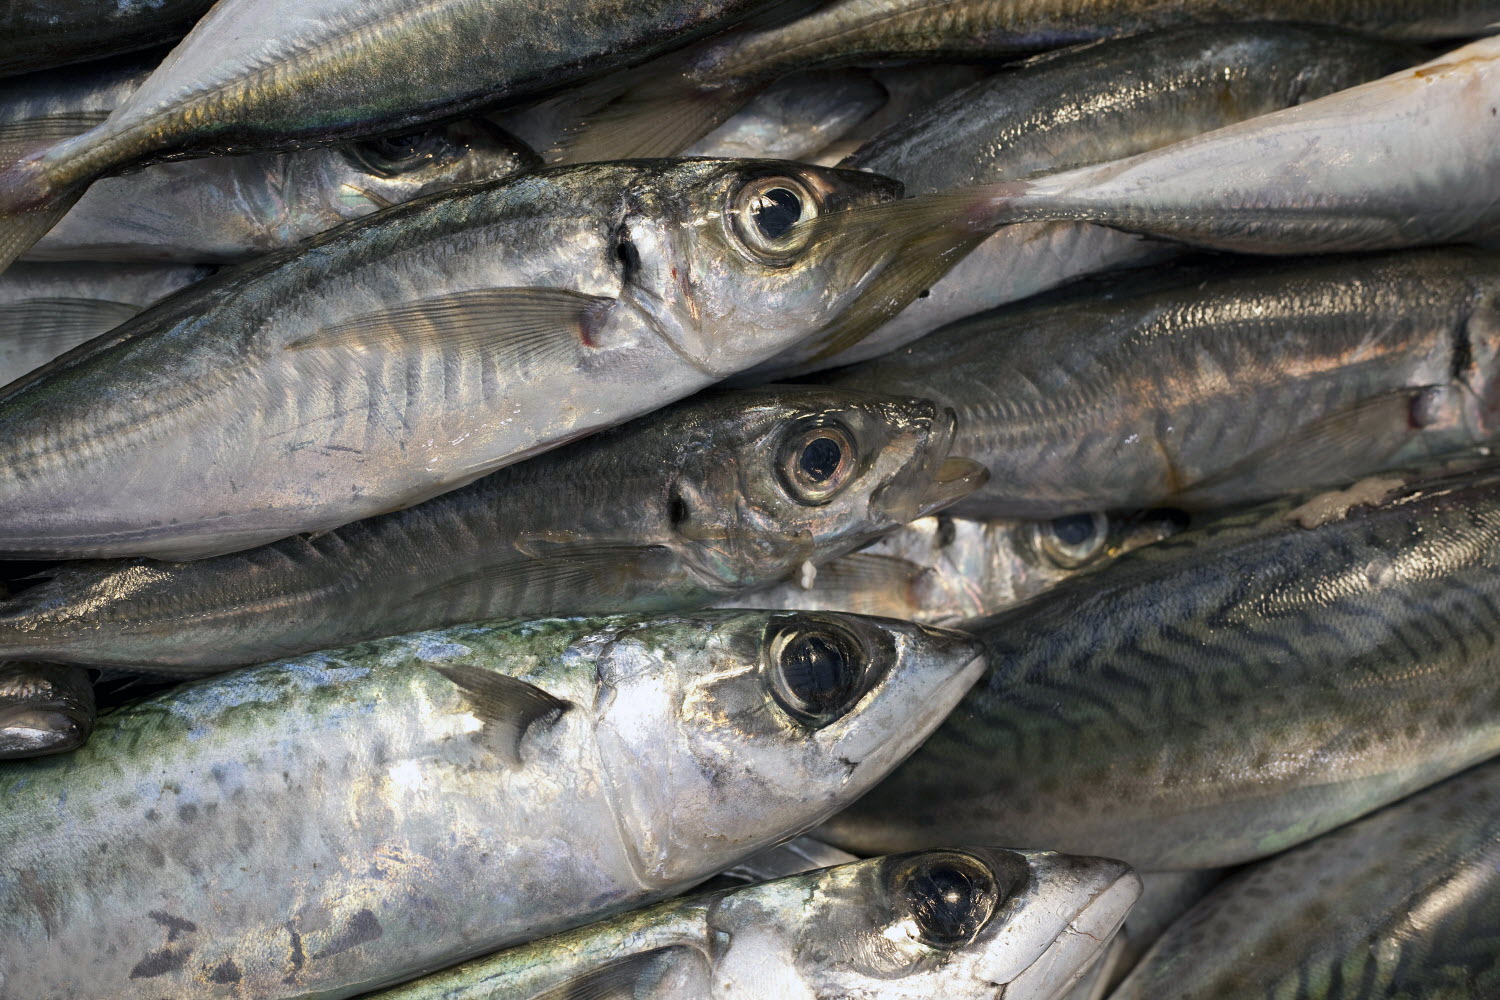 Small pelagics: Lower mackerel and herring quotas, GLOBEFISH